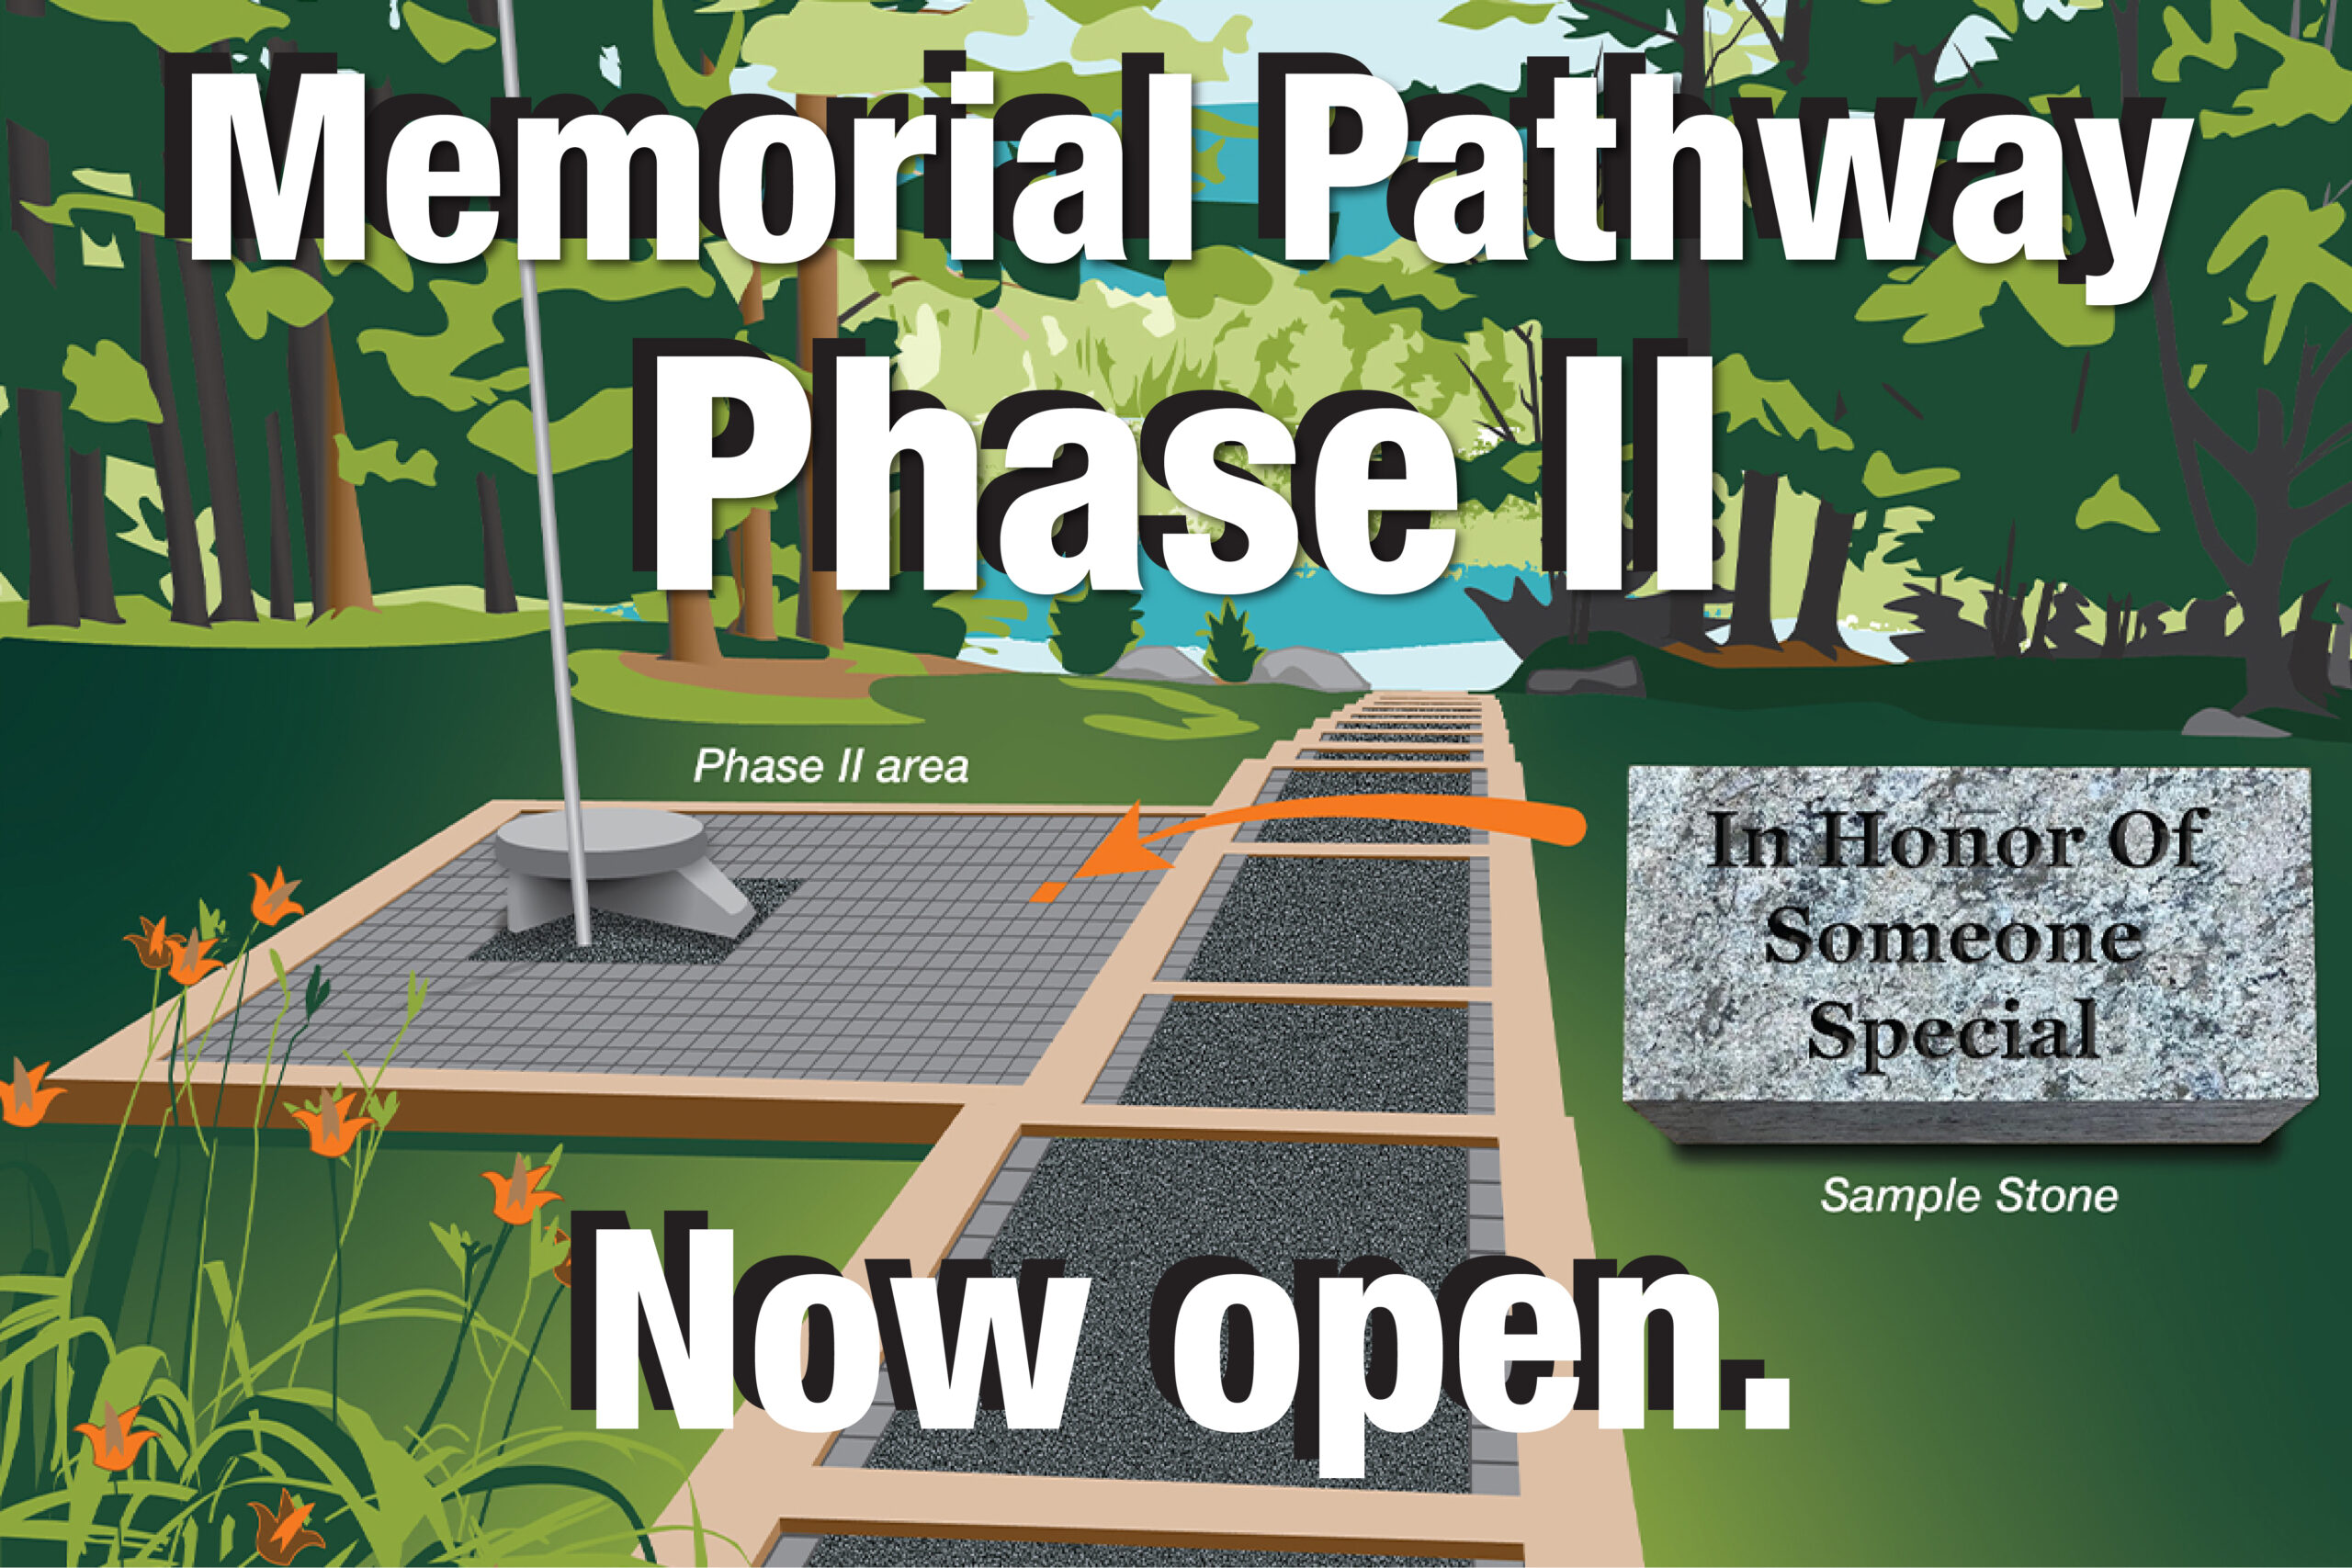 Memorial Pathway pavers, Phase II open